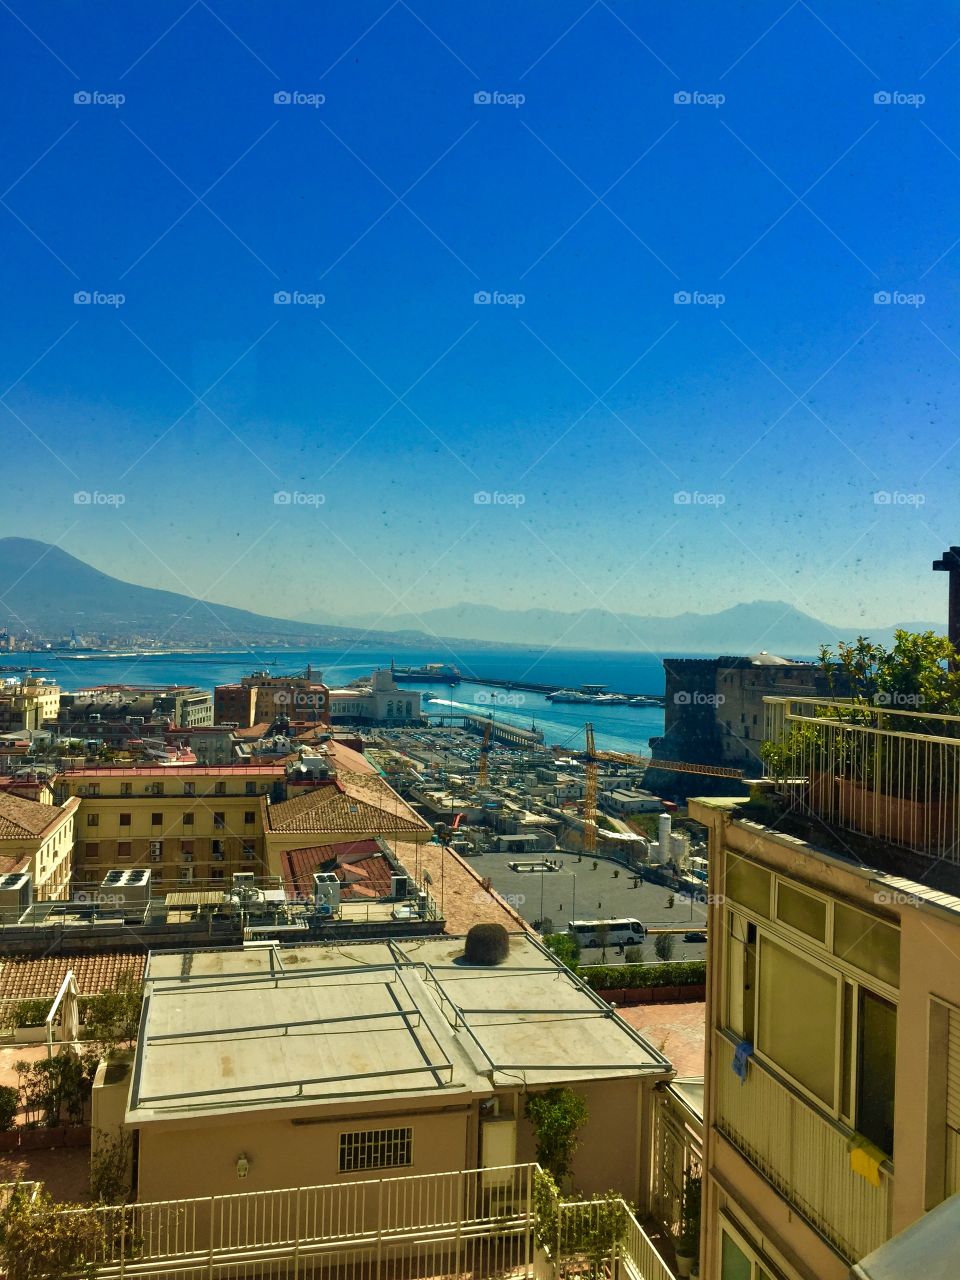 Pretty Port.  Naples, Italy